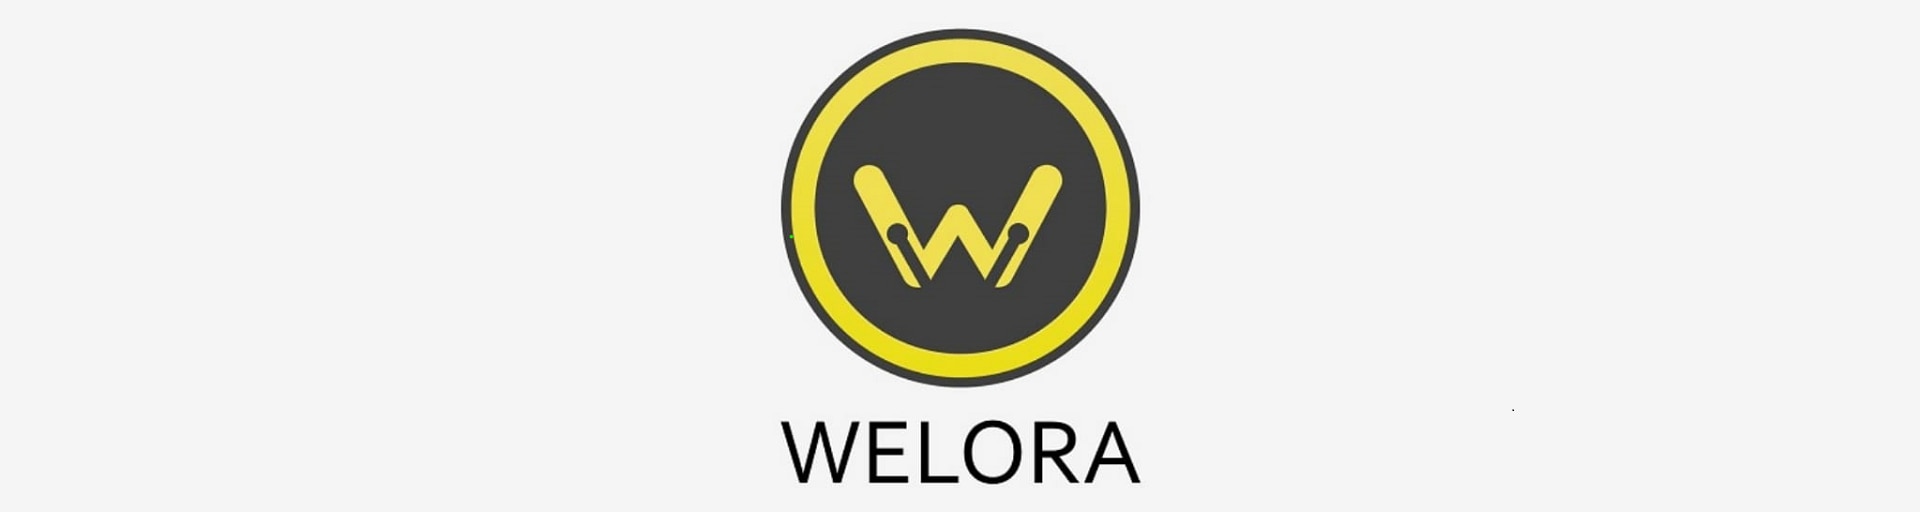 Welora